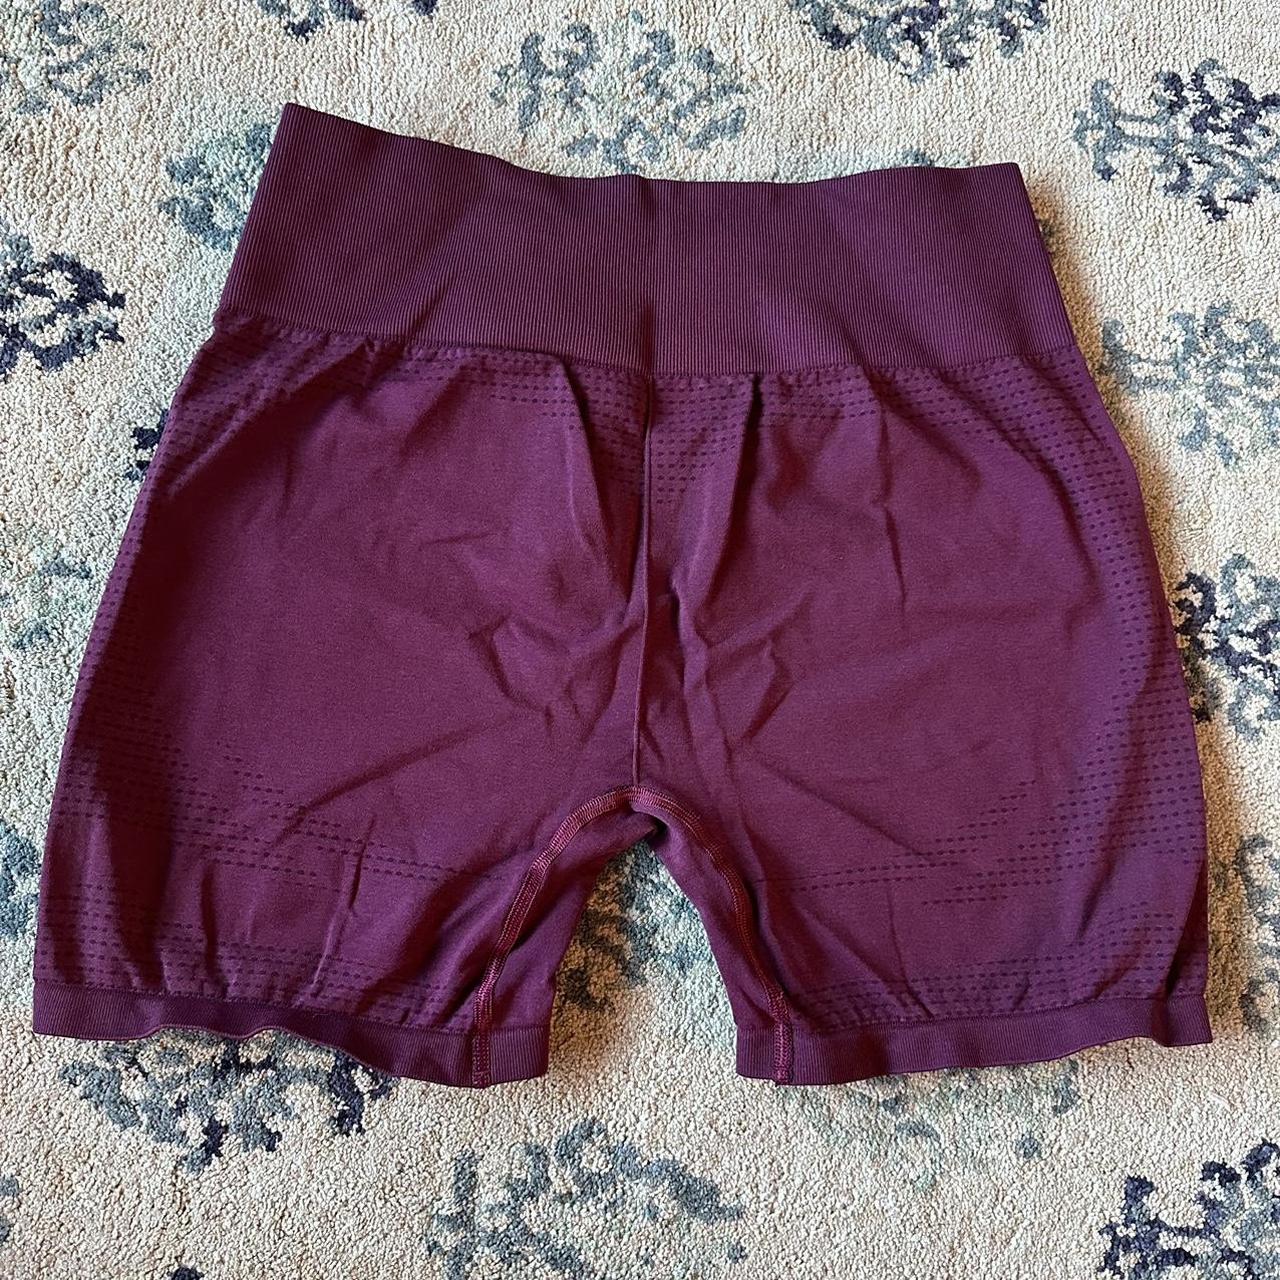 Gymshark Vital Seamless 2.0 Shorts- size XL, worn a